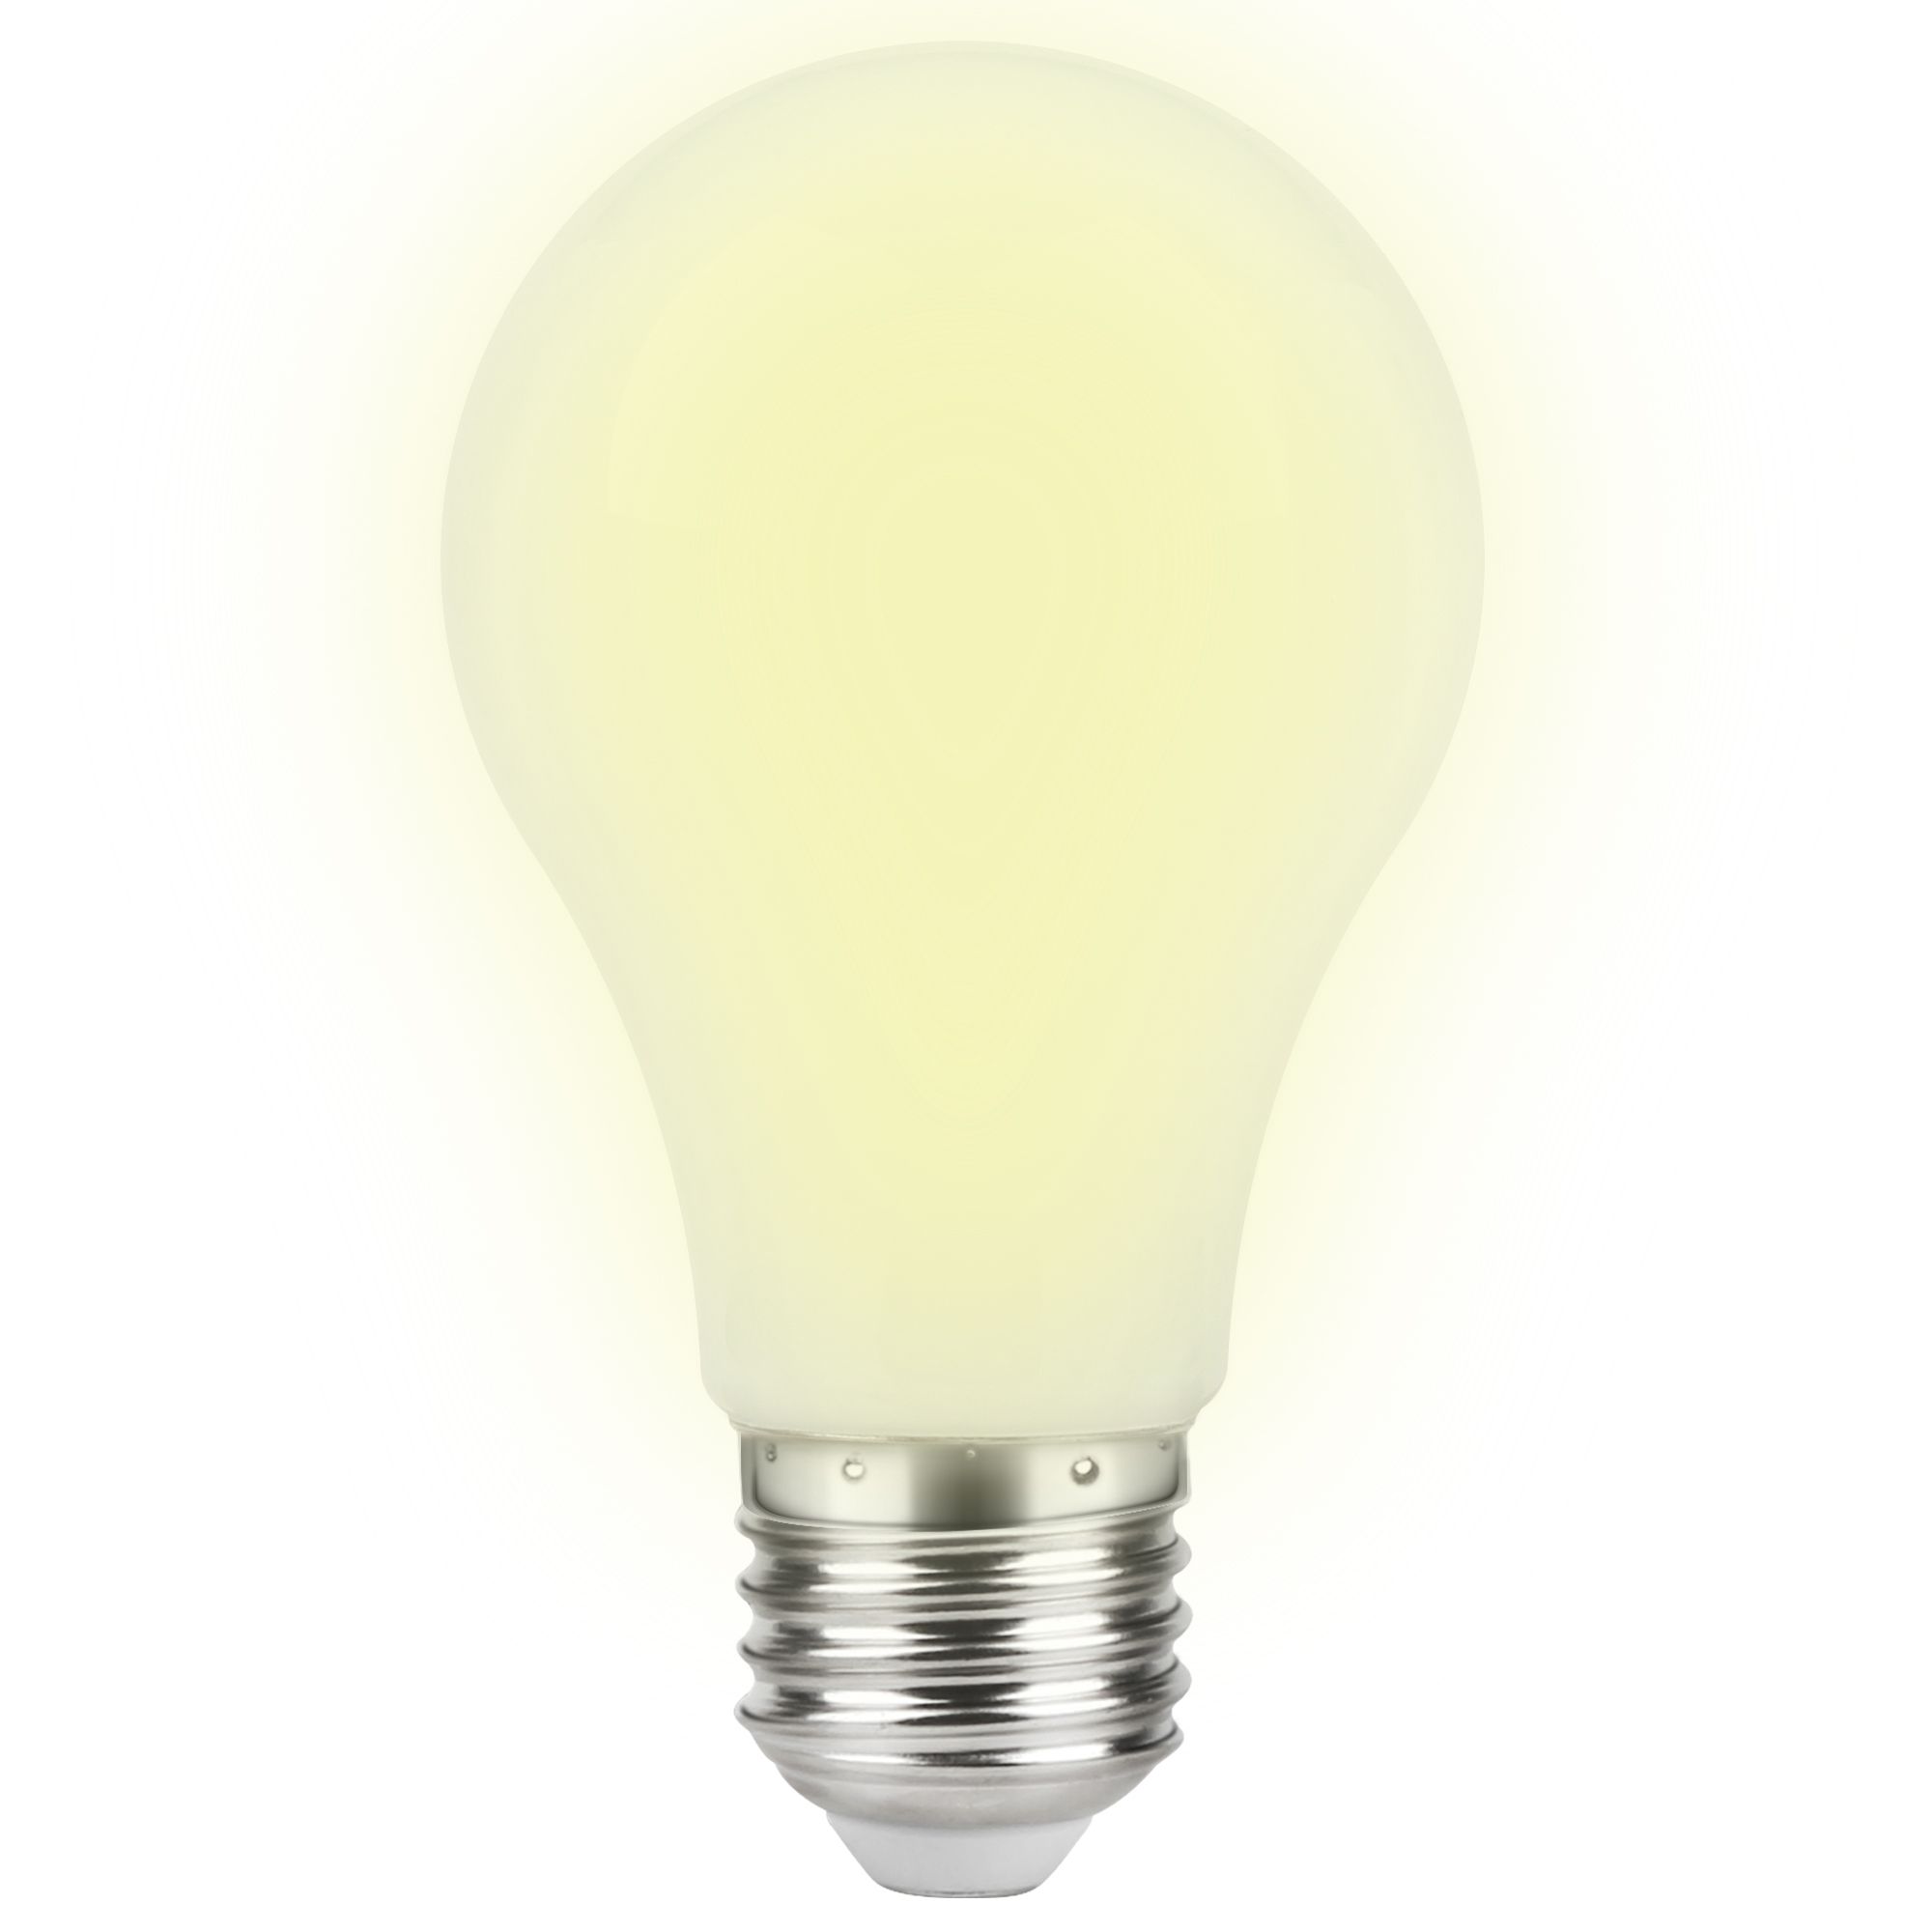 Diall Relax & Work E27 1055lm GLS Warm white & neutral white LED Filament Light bulb